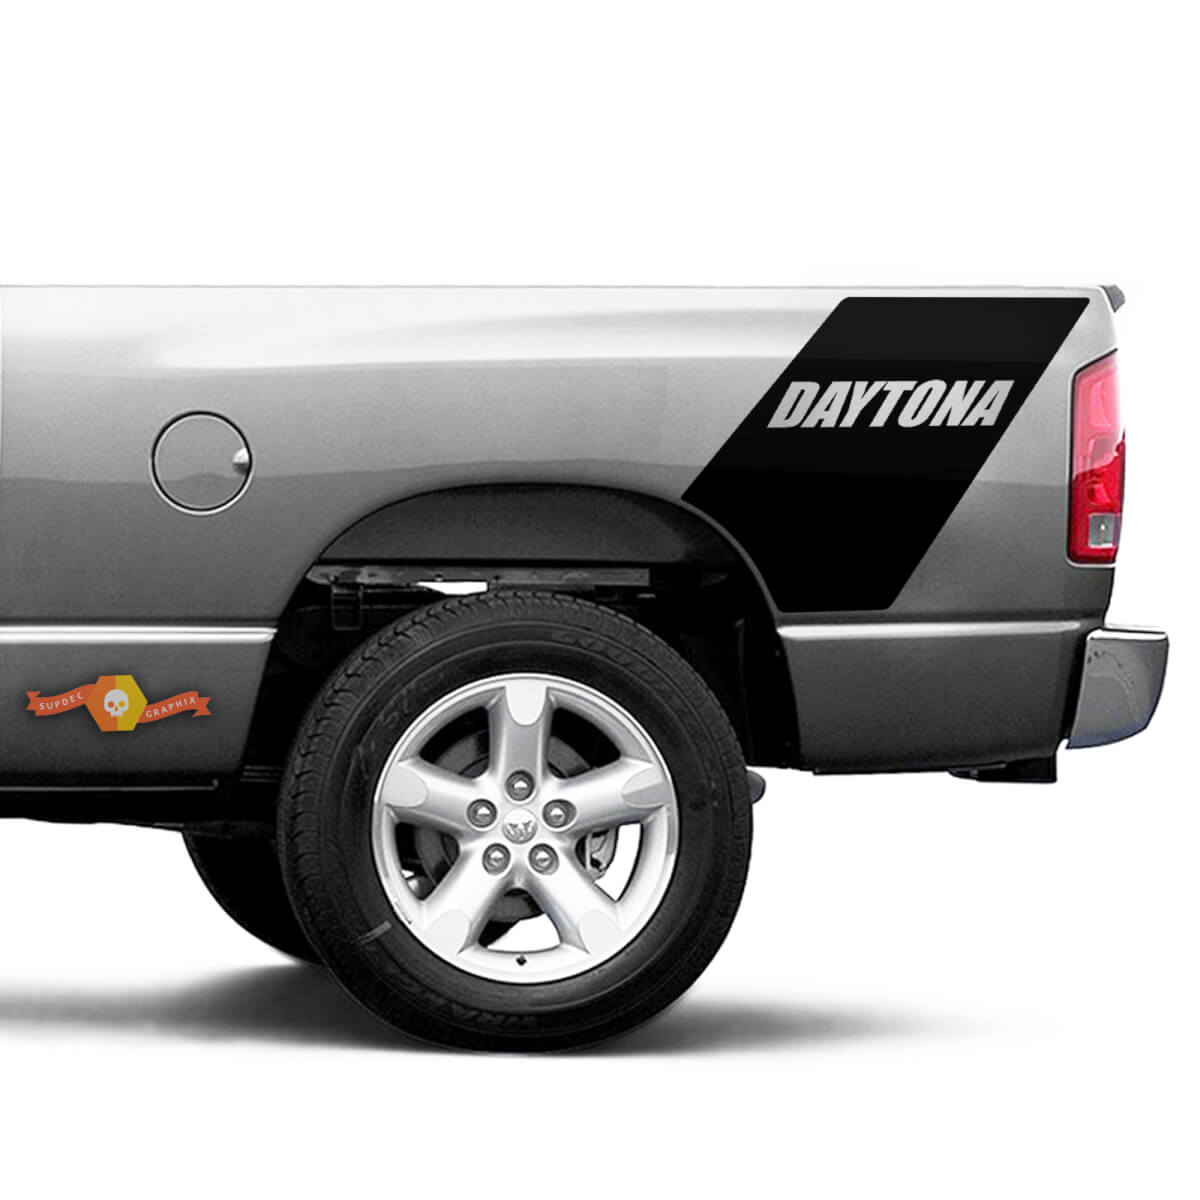 Daytona Dodge Ram 1500 Bed Side Racing Rear Stripe Vinyl Decal Sticker 2